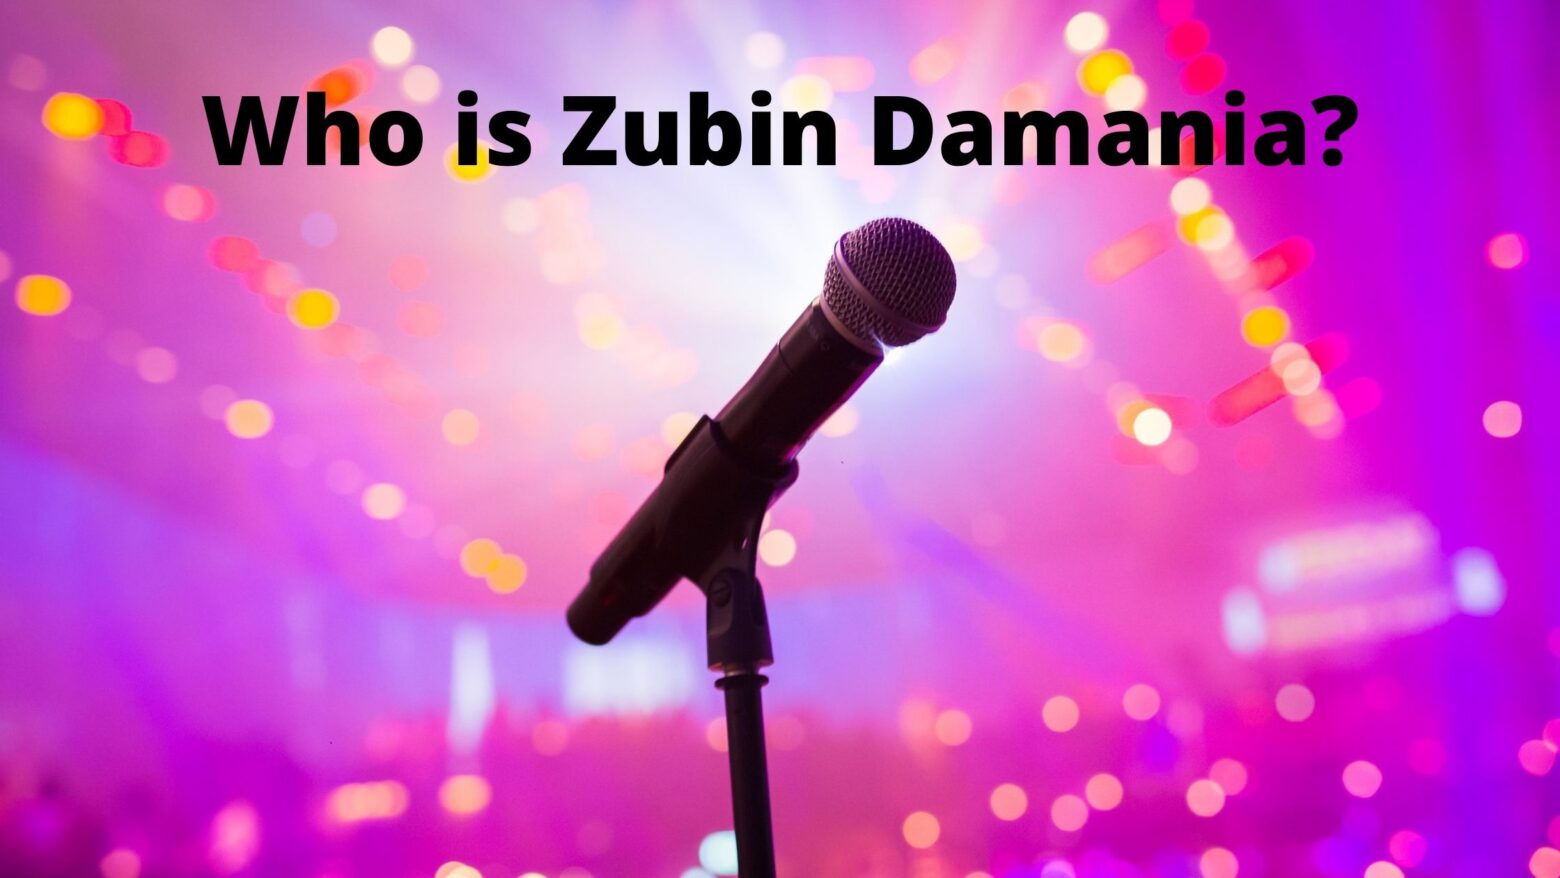 Who is Zubin Damania?